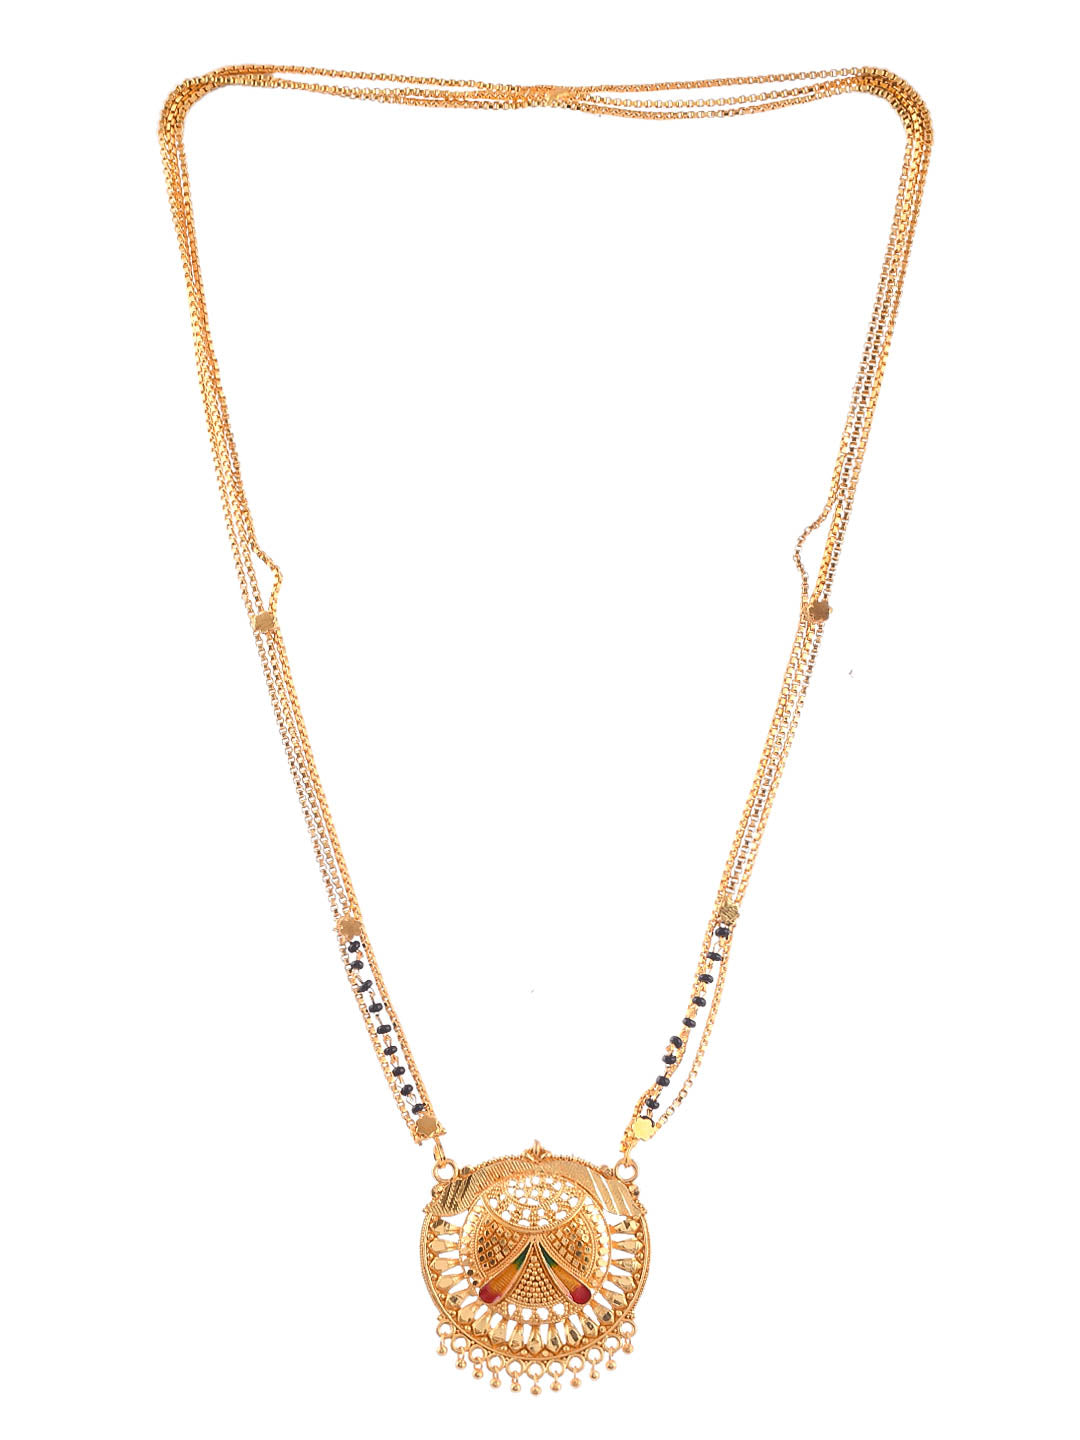 Gold Plated Meenakari Black Beads Chain Mangalsutra Necklace